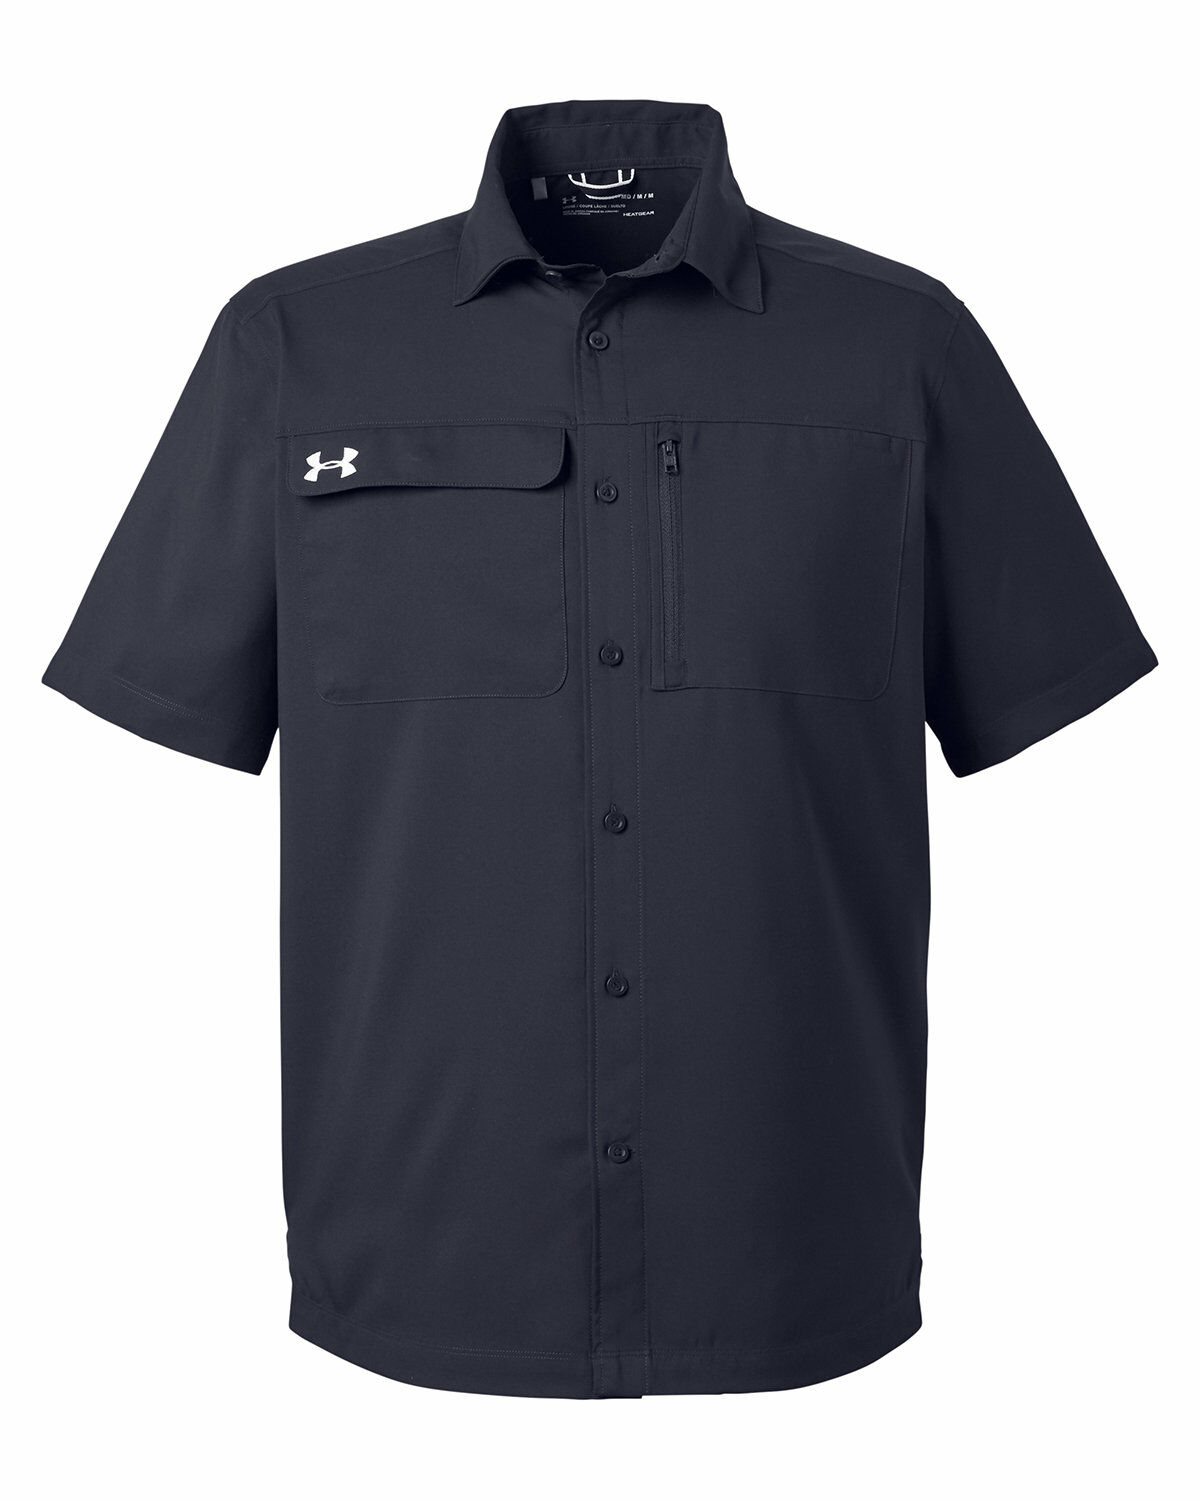 Branded Under Armour Men’s Motivate Coach Woven Shirt Black/White